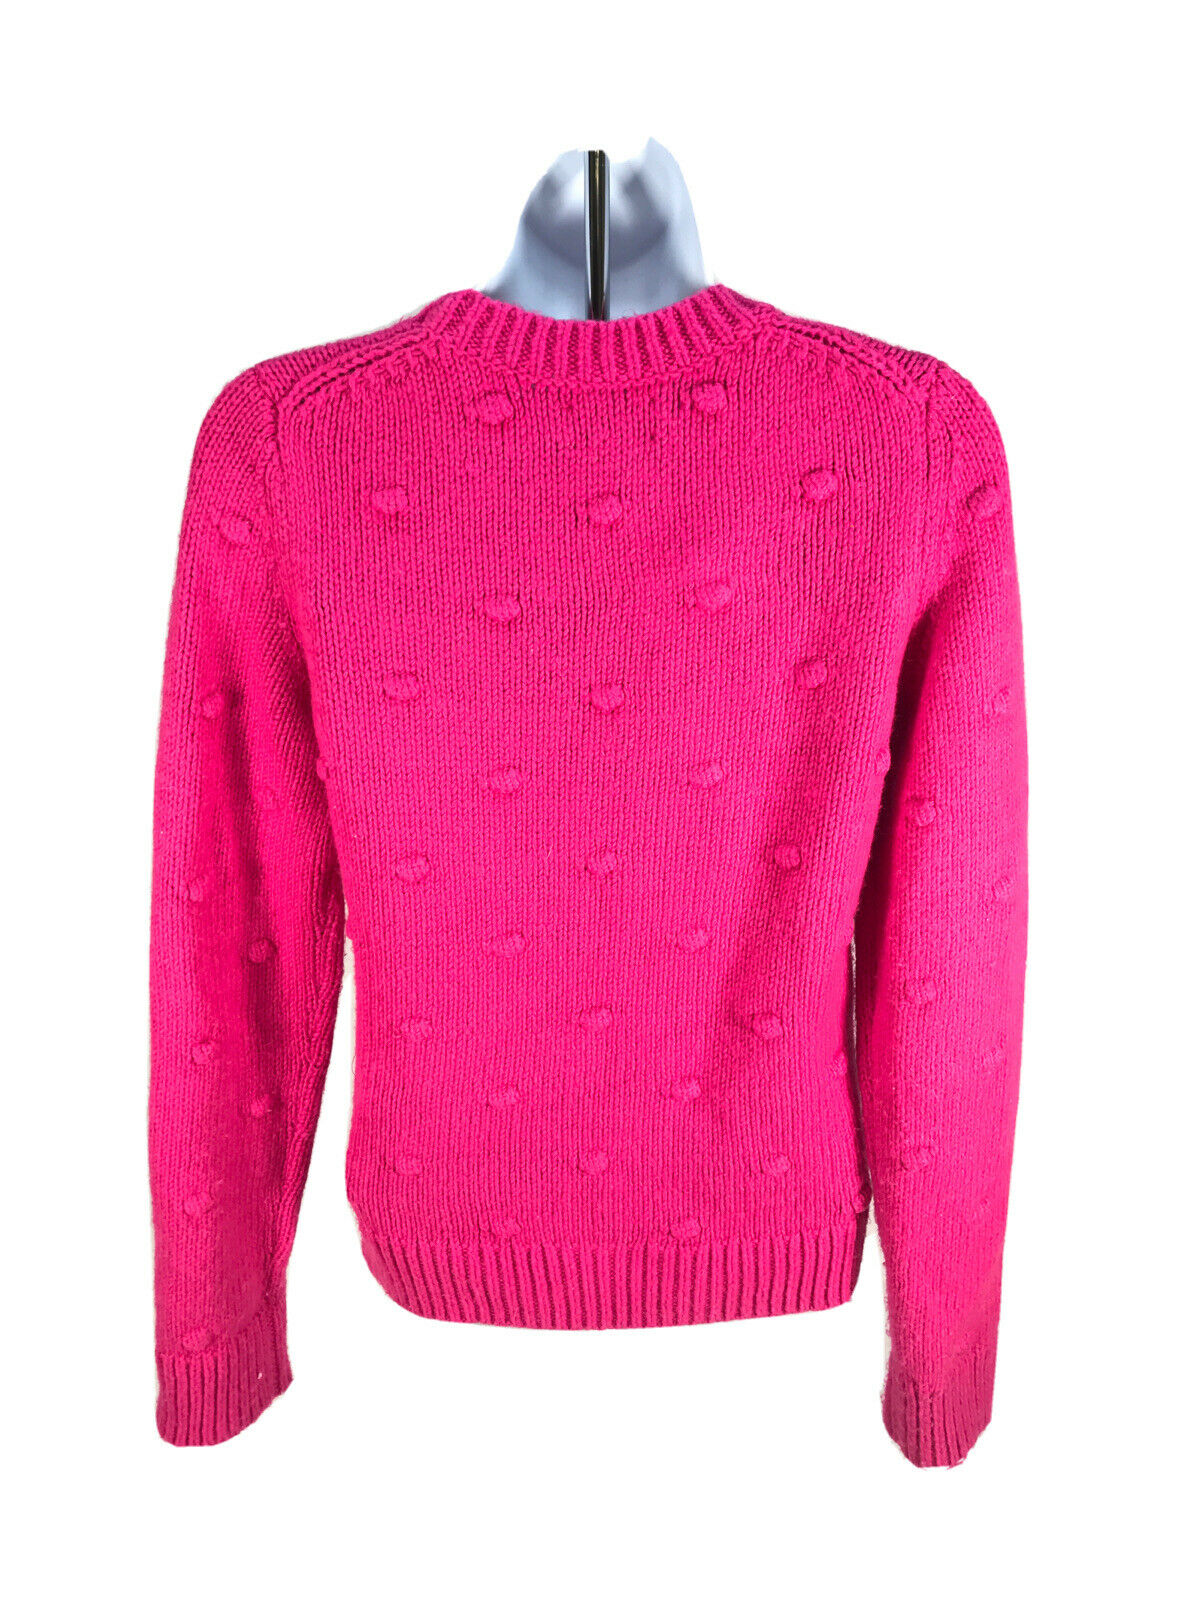 Lucky Brand Women's Pink Bobble Crew Neck Sweater Sz XS